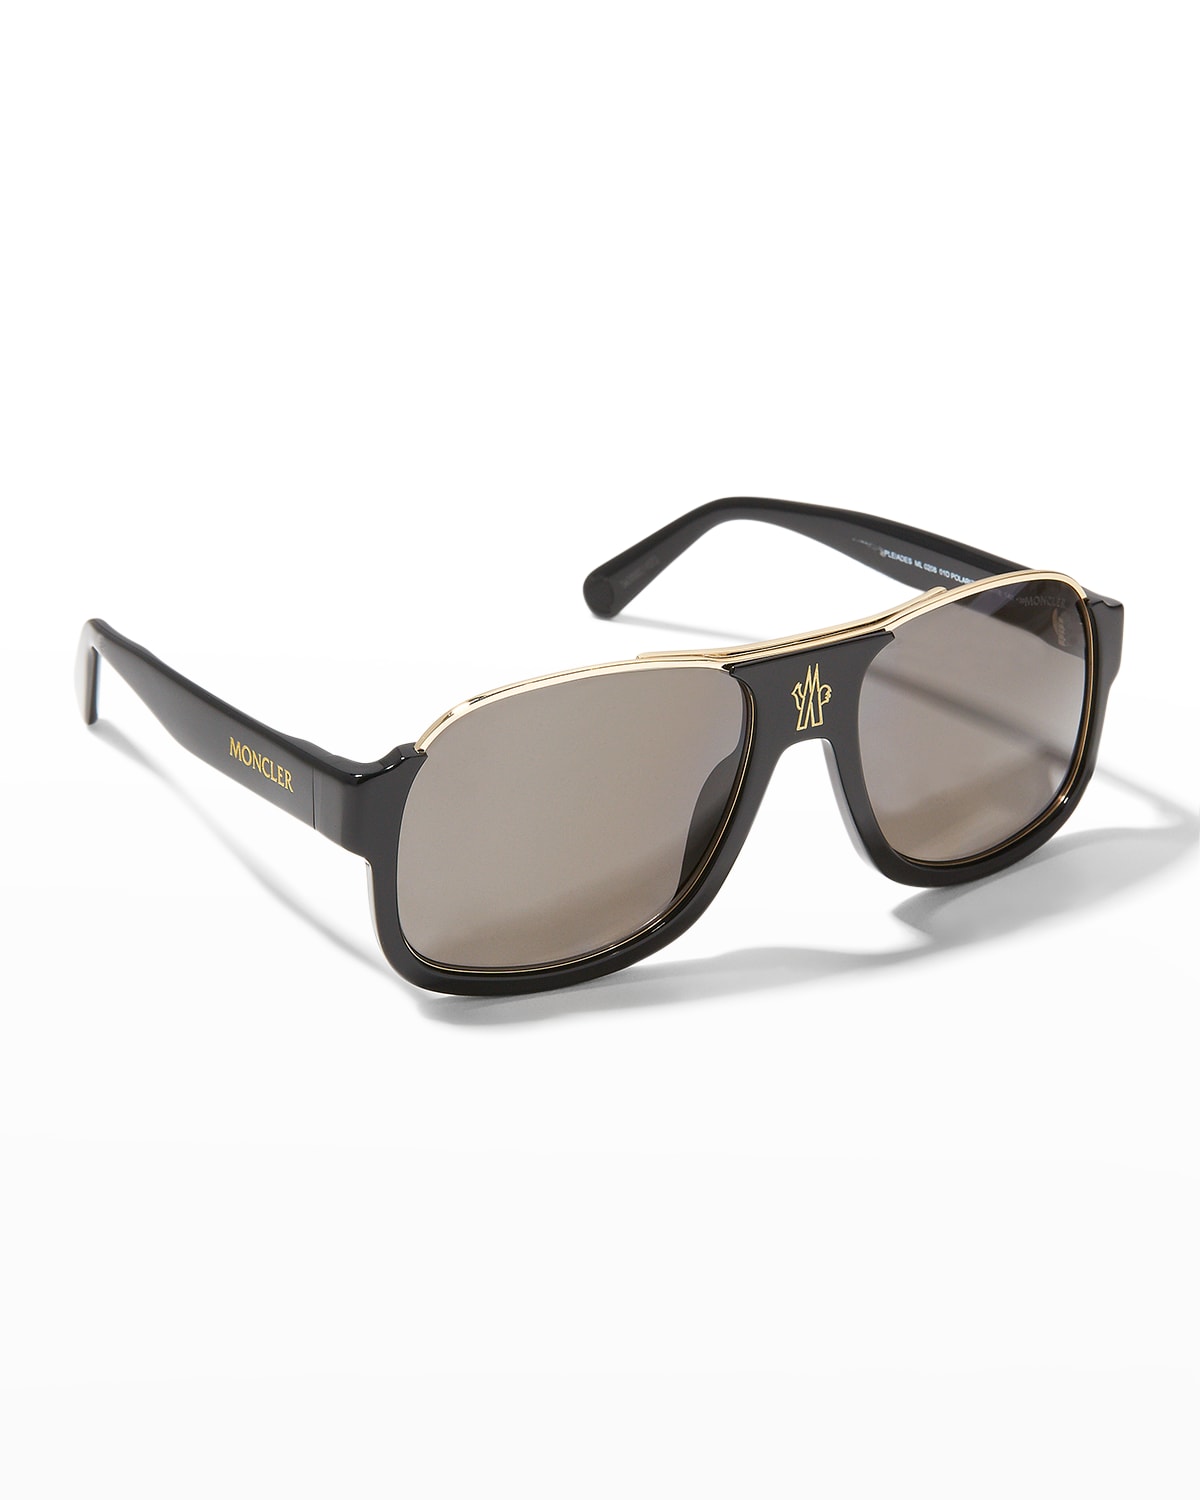 Moncler Sunglasses | Neiman Marcus